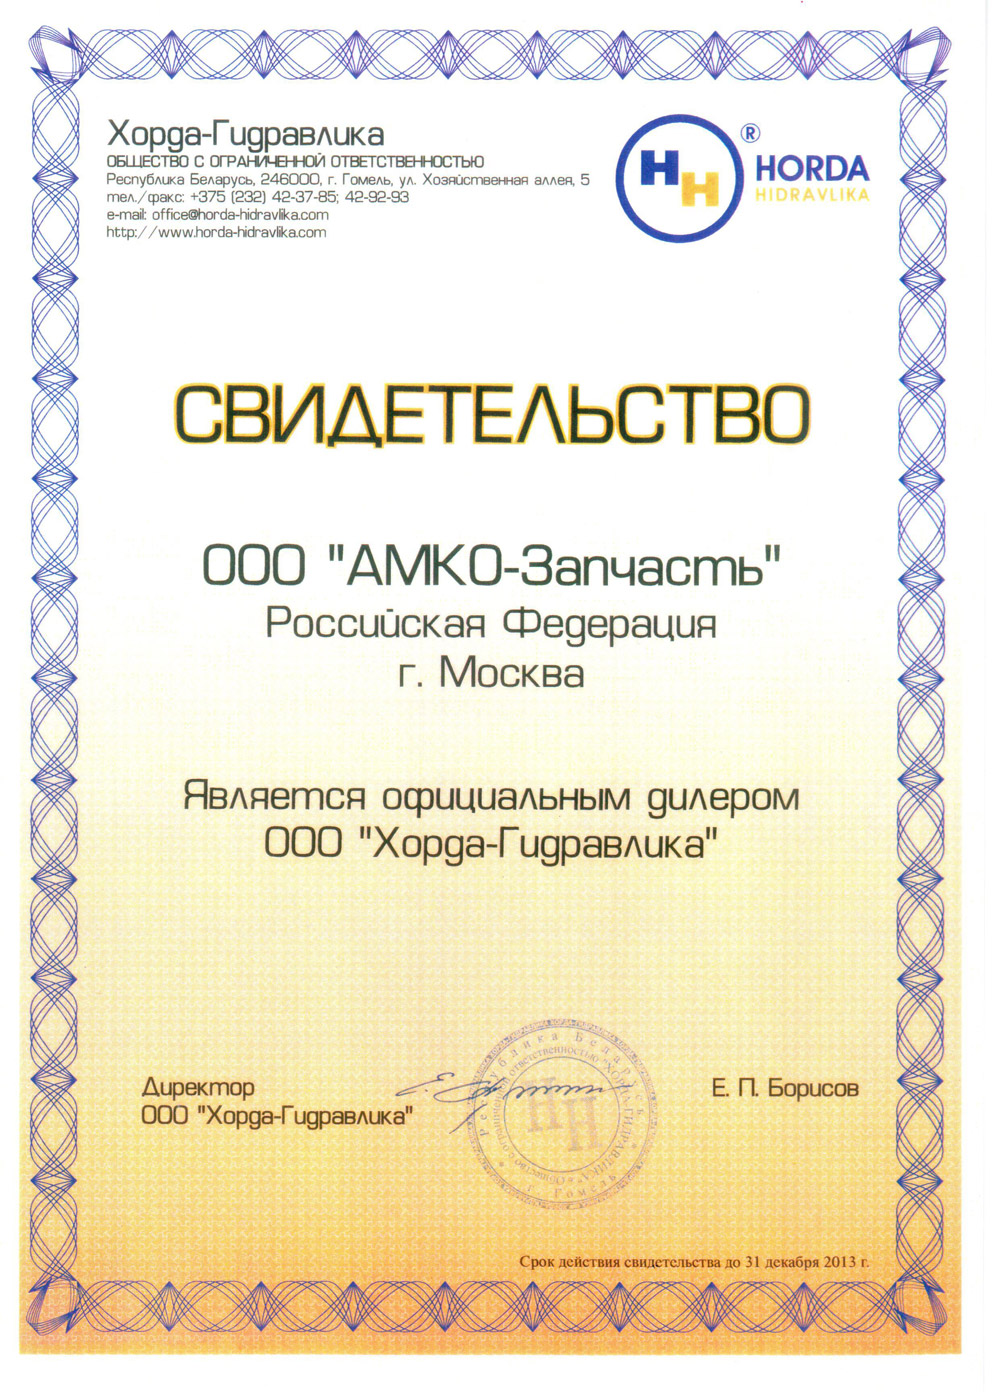 Сертификат Horda Hidravlika